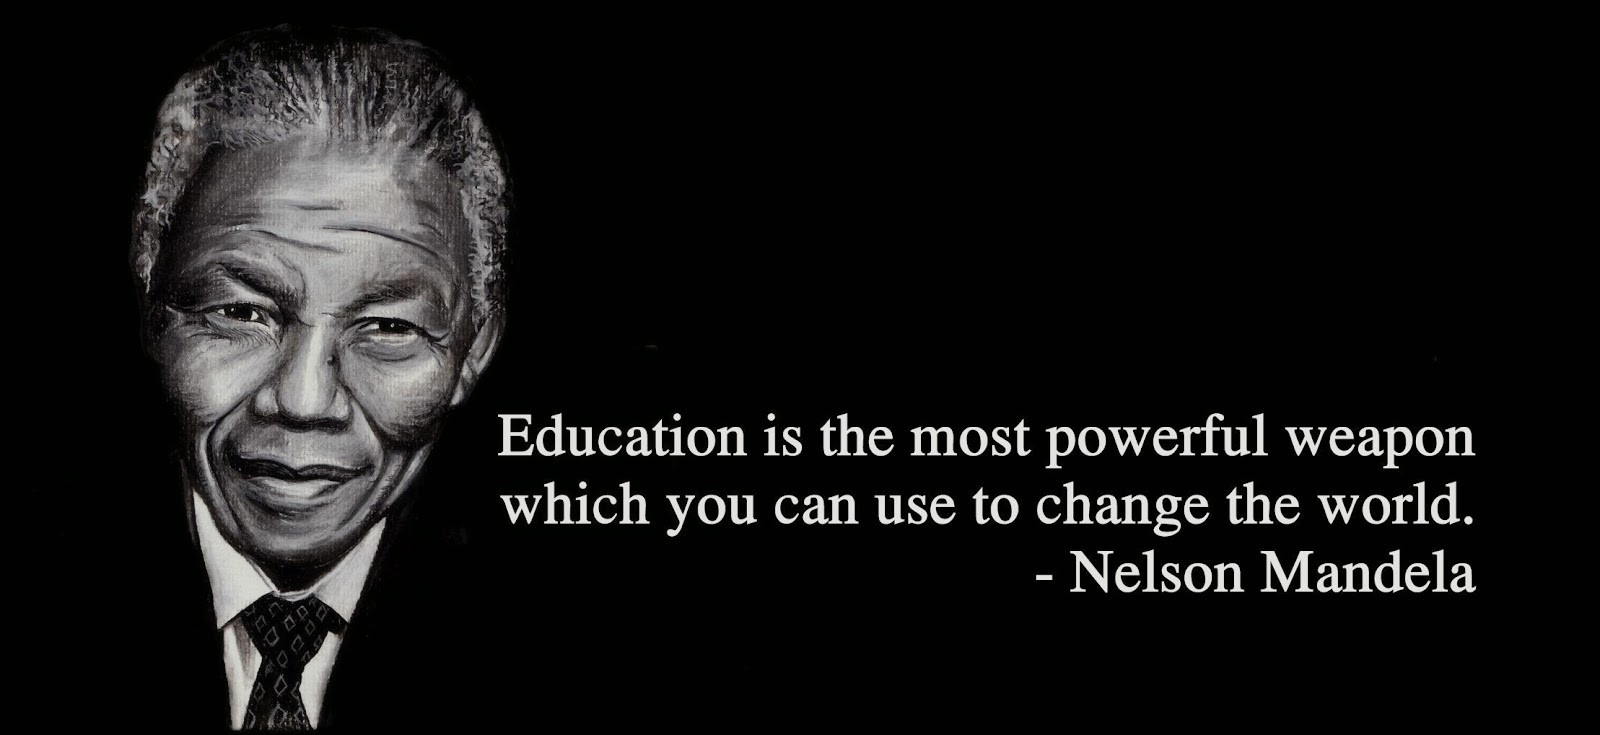 Mandela Education Quote
 Cedric Morada Education The importance of acquiring it